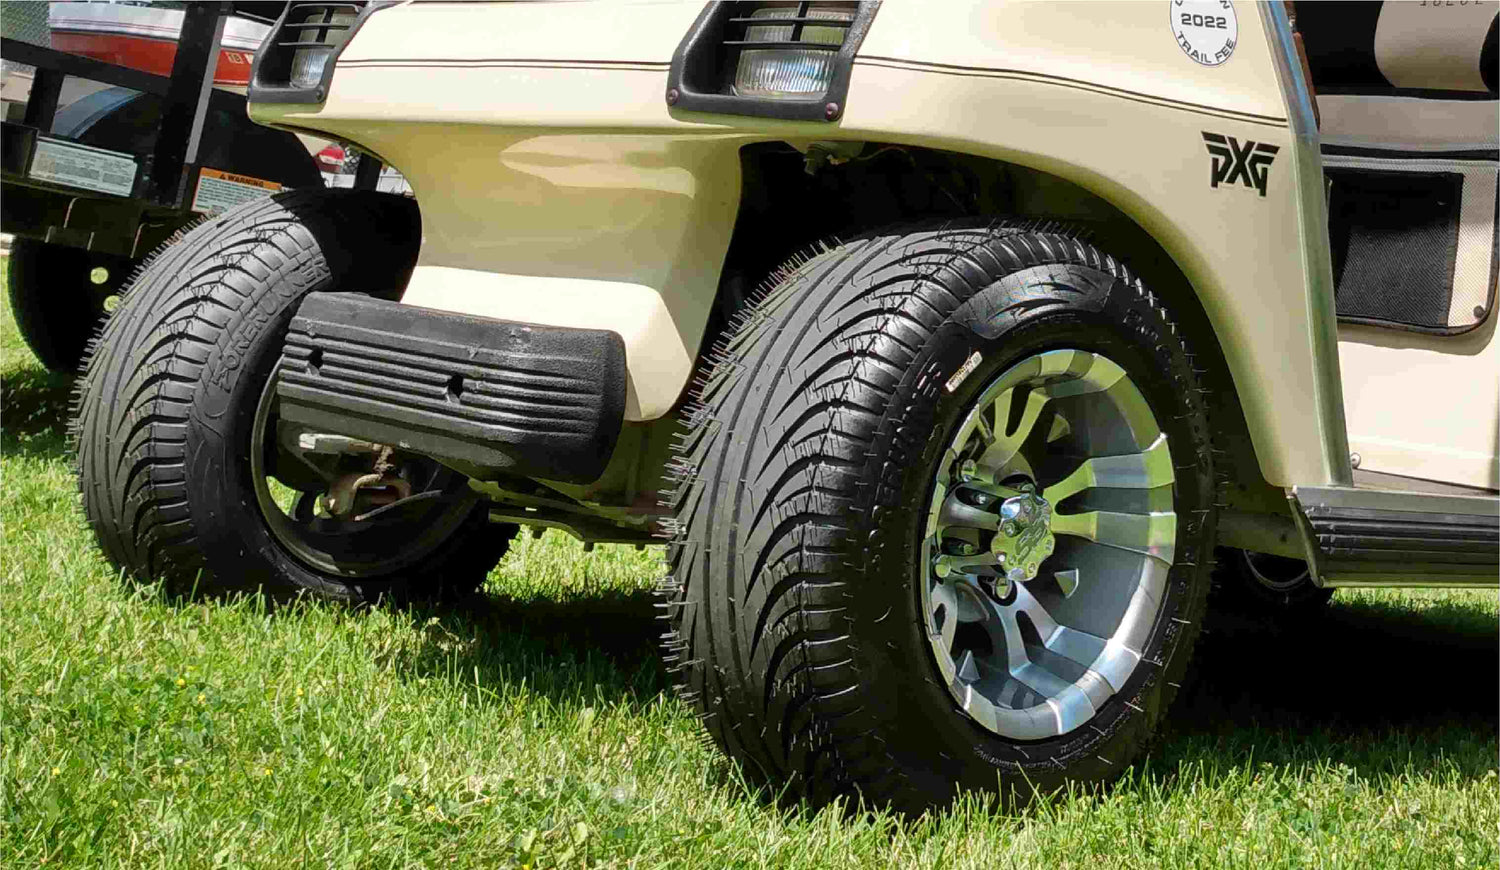 Stock Golf Cart Tires installed on a golf cart